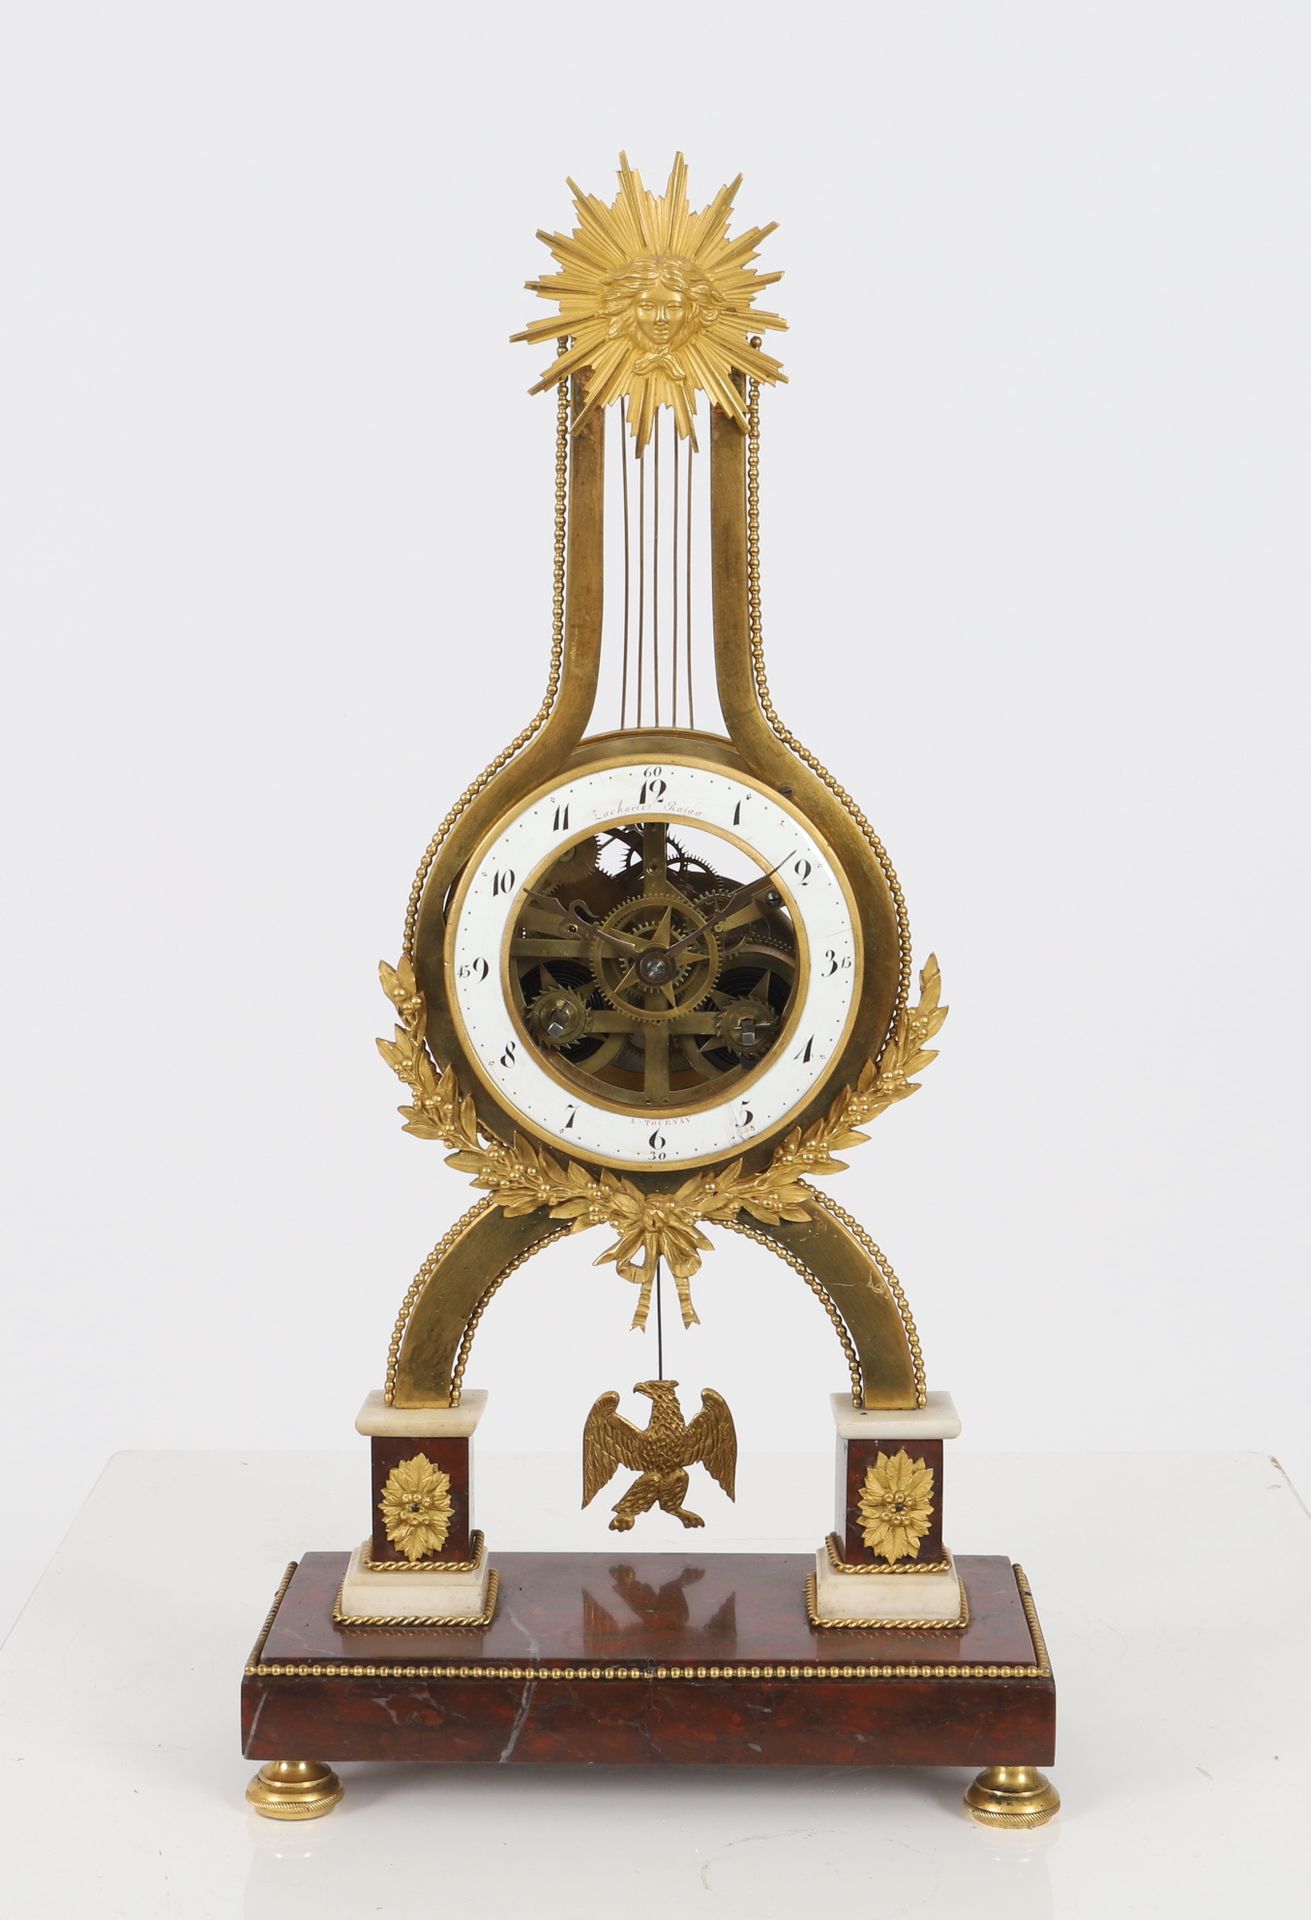 Null 镂空钟 - 路易十六
琴琴形镀金青铜钟，顶端是阿波罗太阳纹框架。
表盘上饰有精美的树叶装饰，并配有白色珐琅章环和阿拉伯数字时标，署名为 "Zachar&hellip;